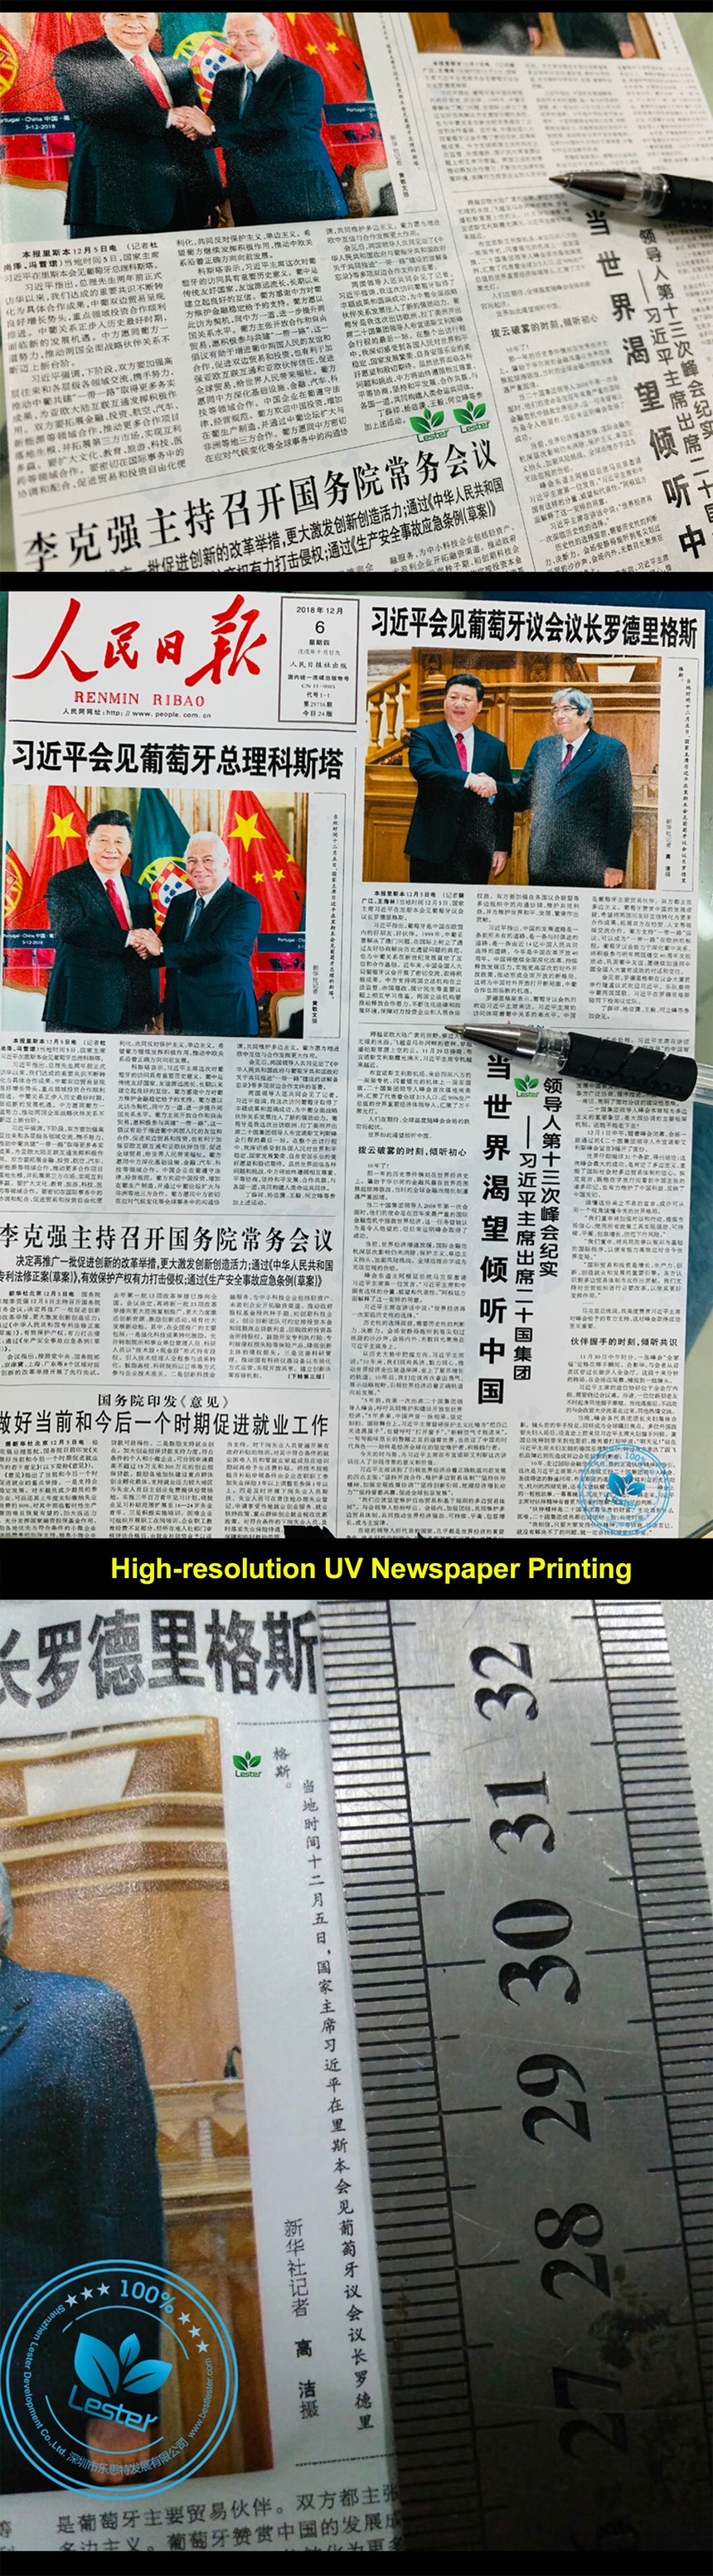 UV newspaper printing.jpg